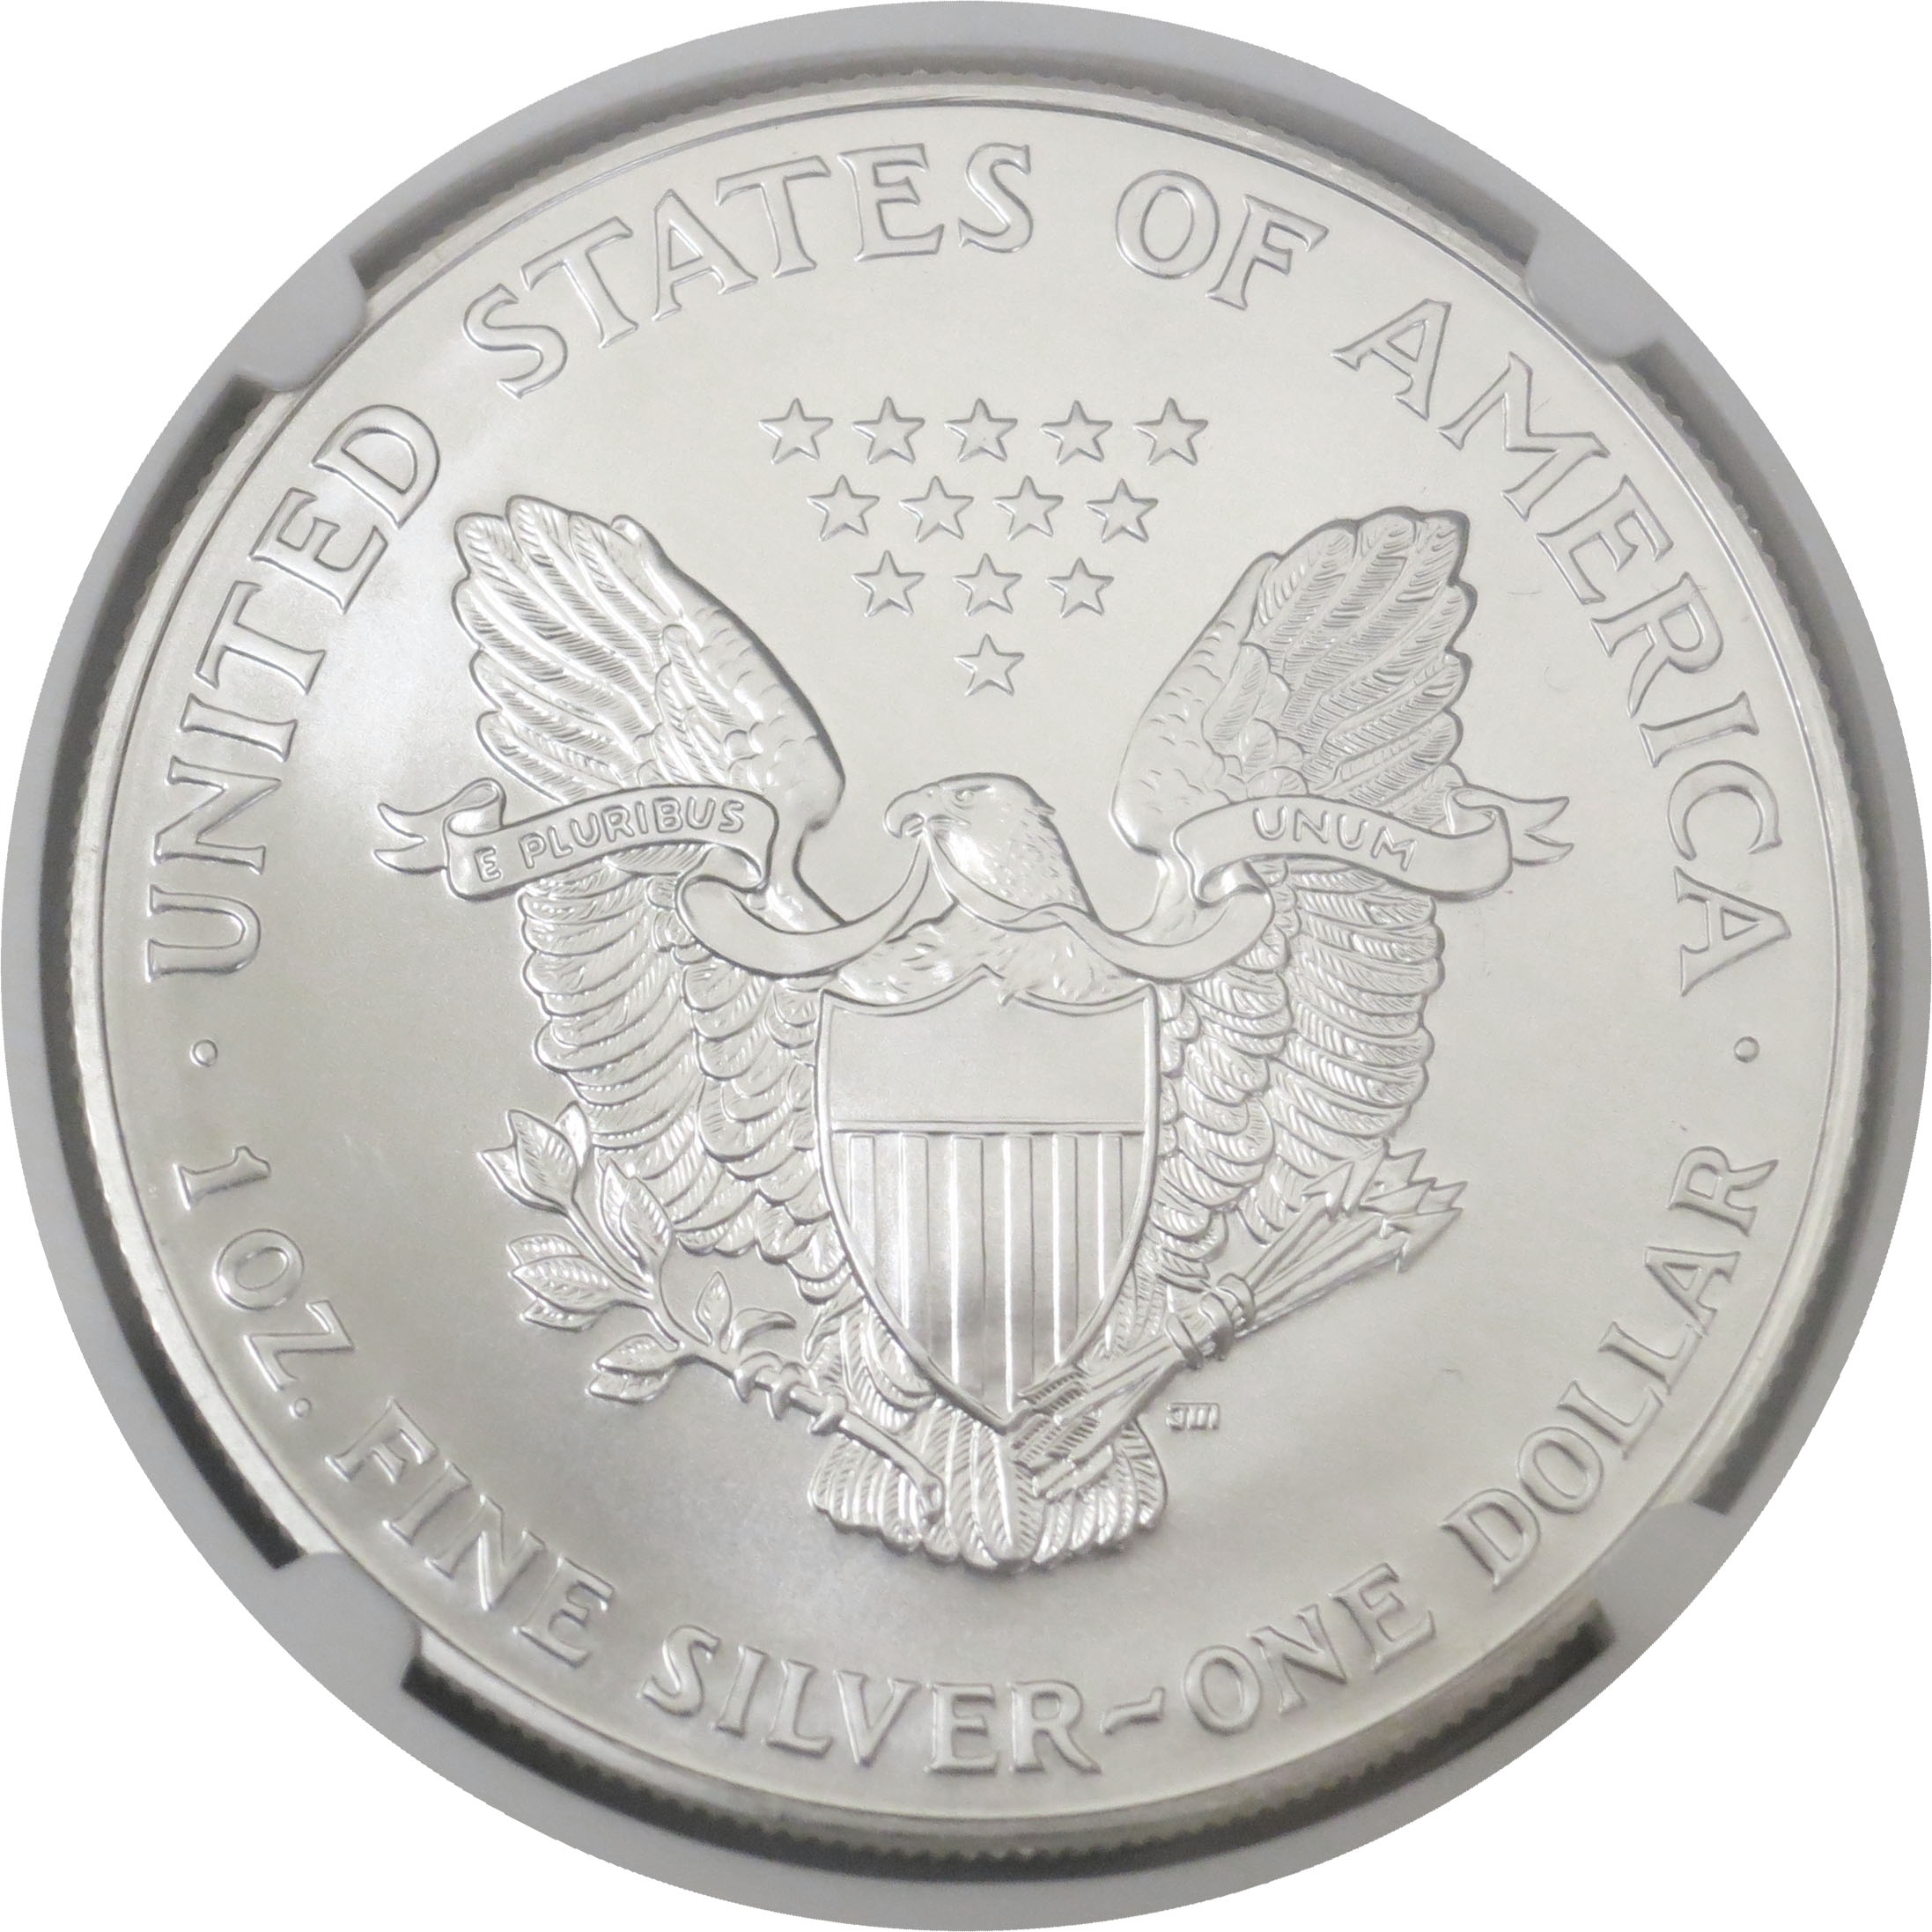 silver eagle coins on ebay